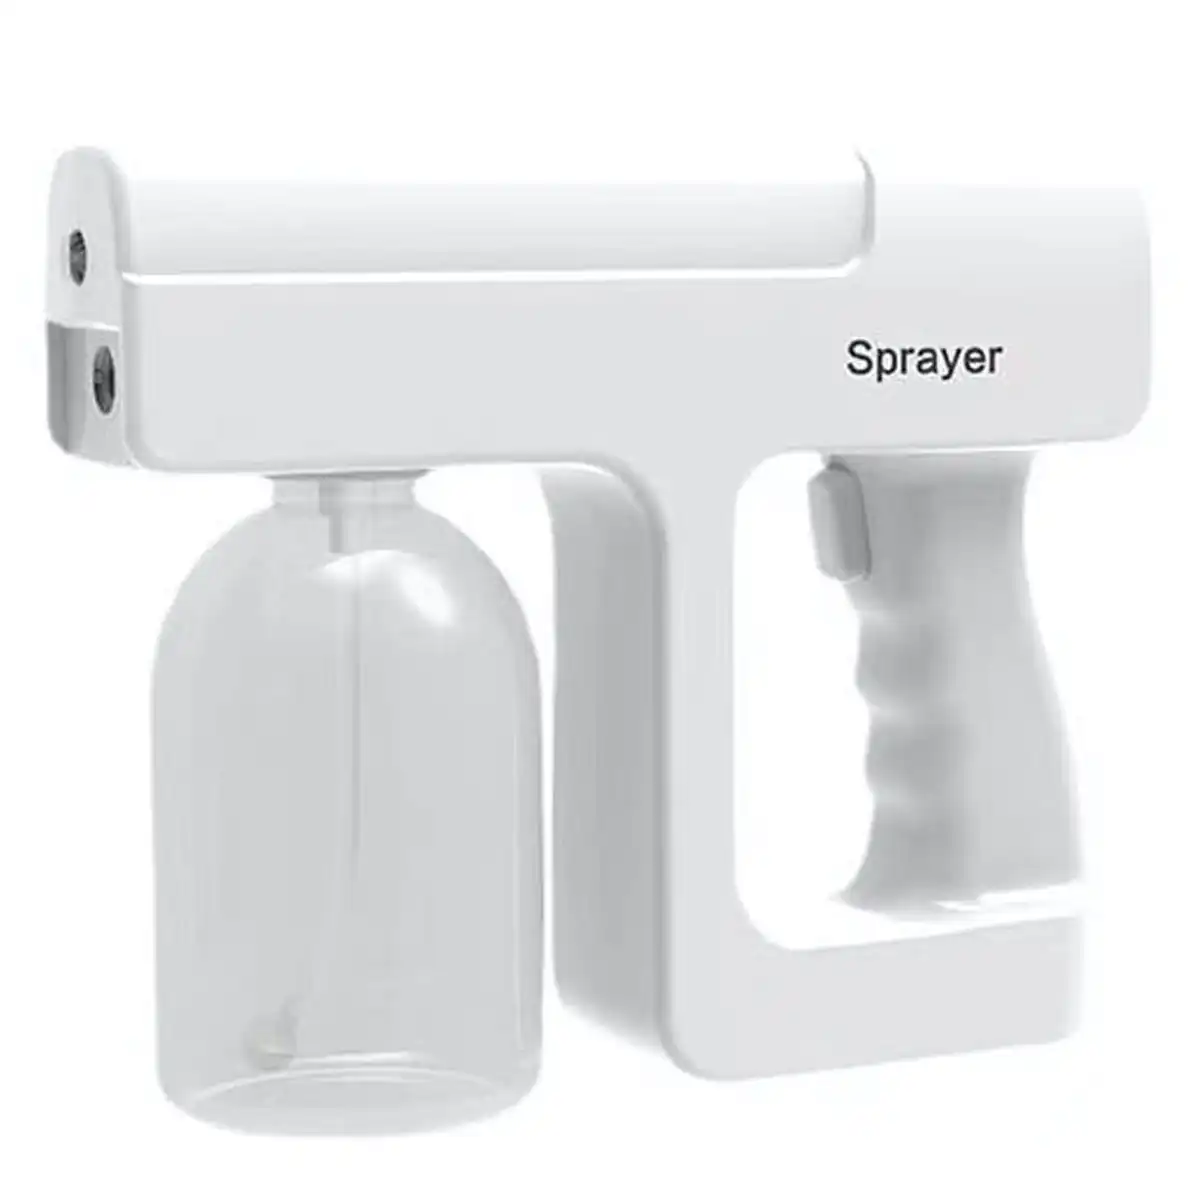 TODO Blue Light Nano Spray Disinfection Gun Air Purifier Sterilizer Portable Rechargeable 300ml - White